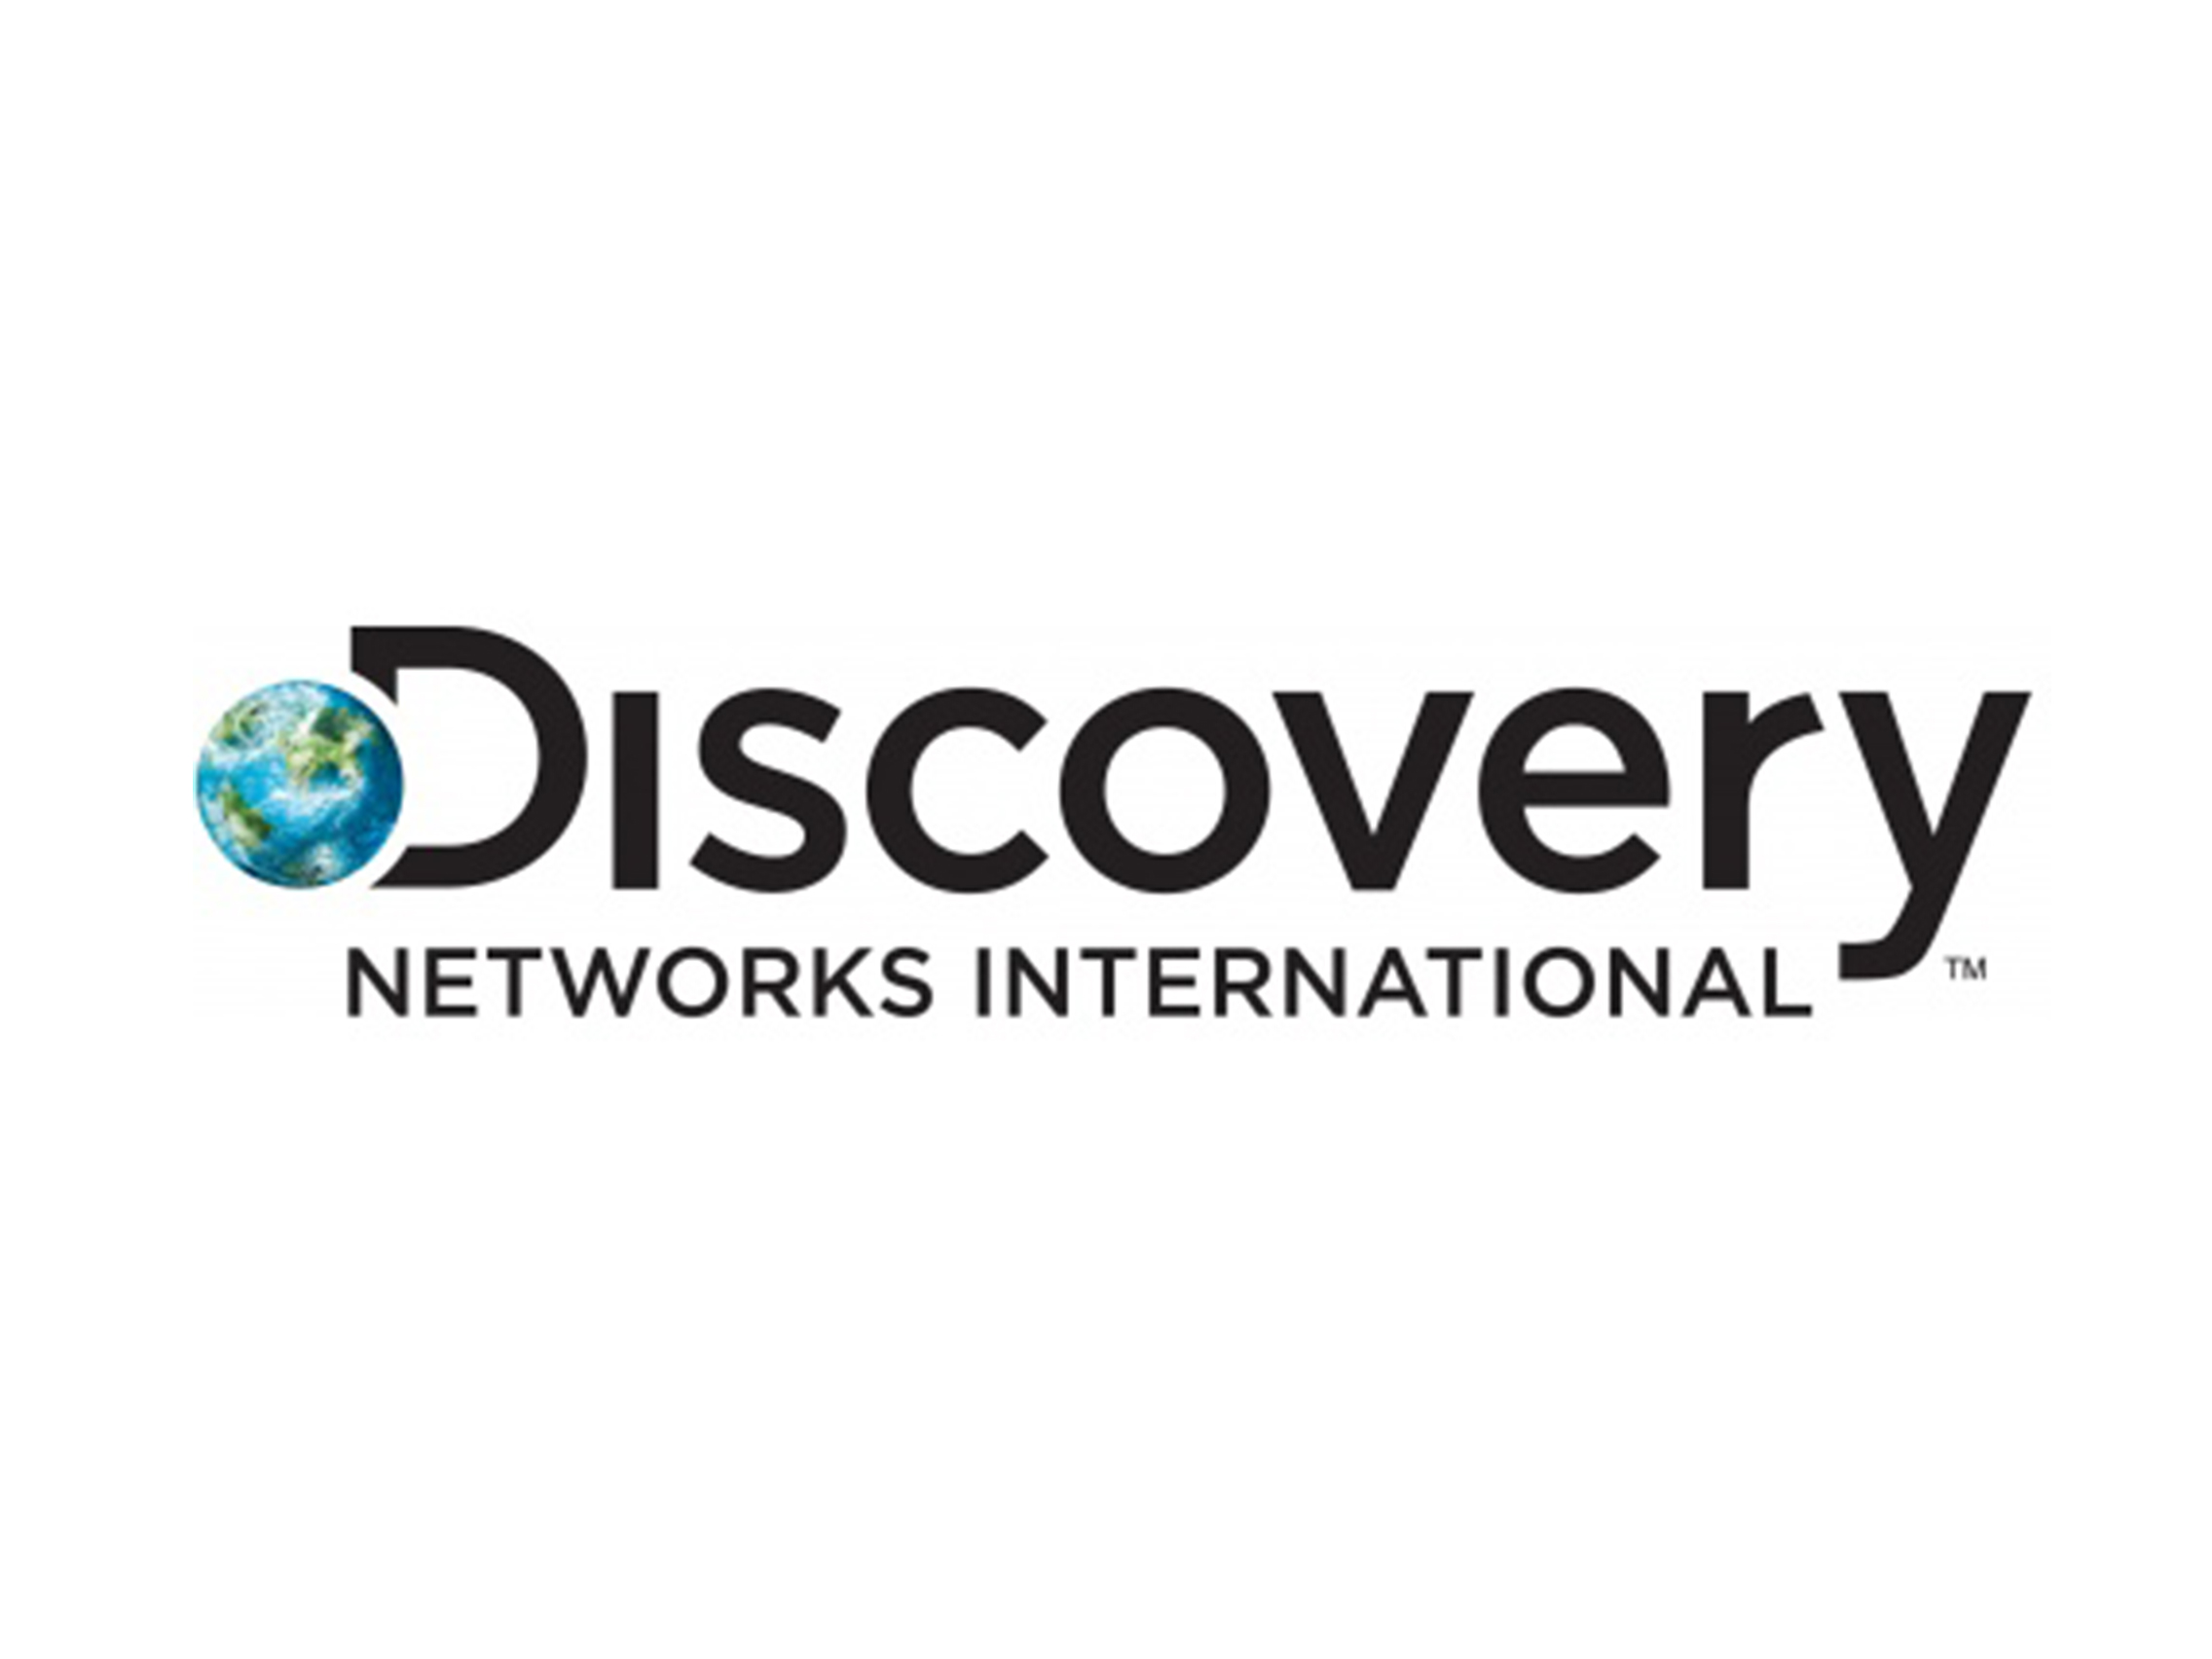 Discovery Intl Logo.jpg